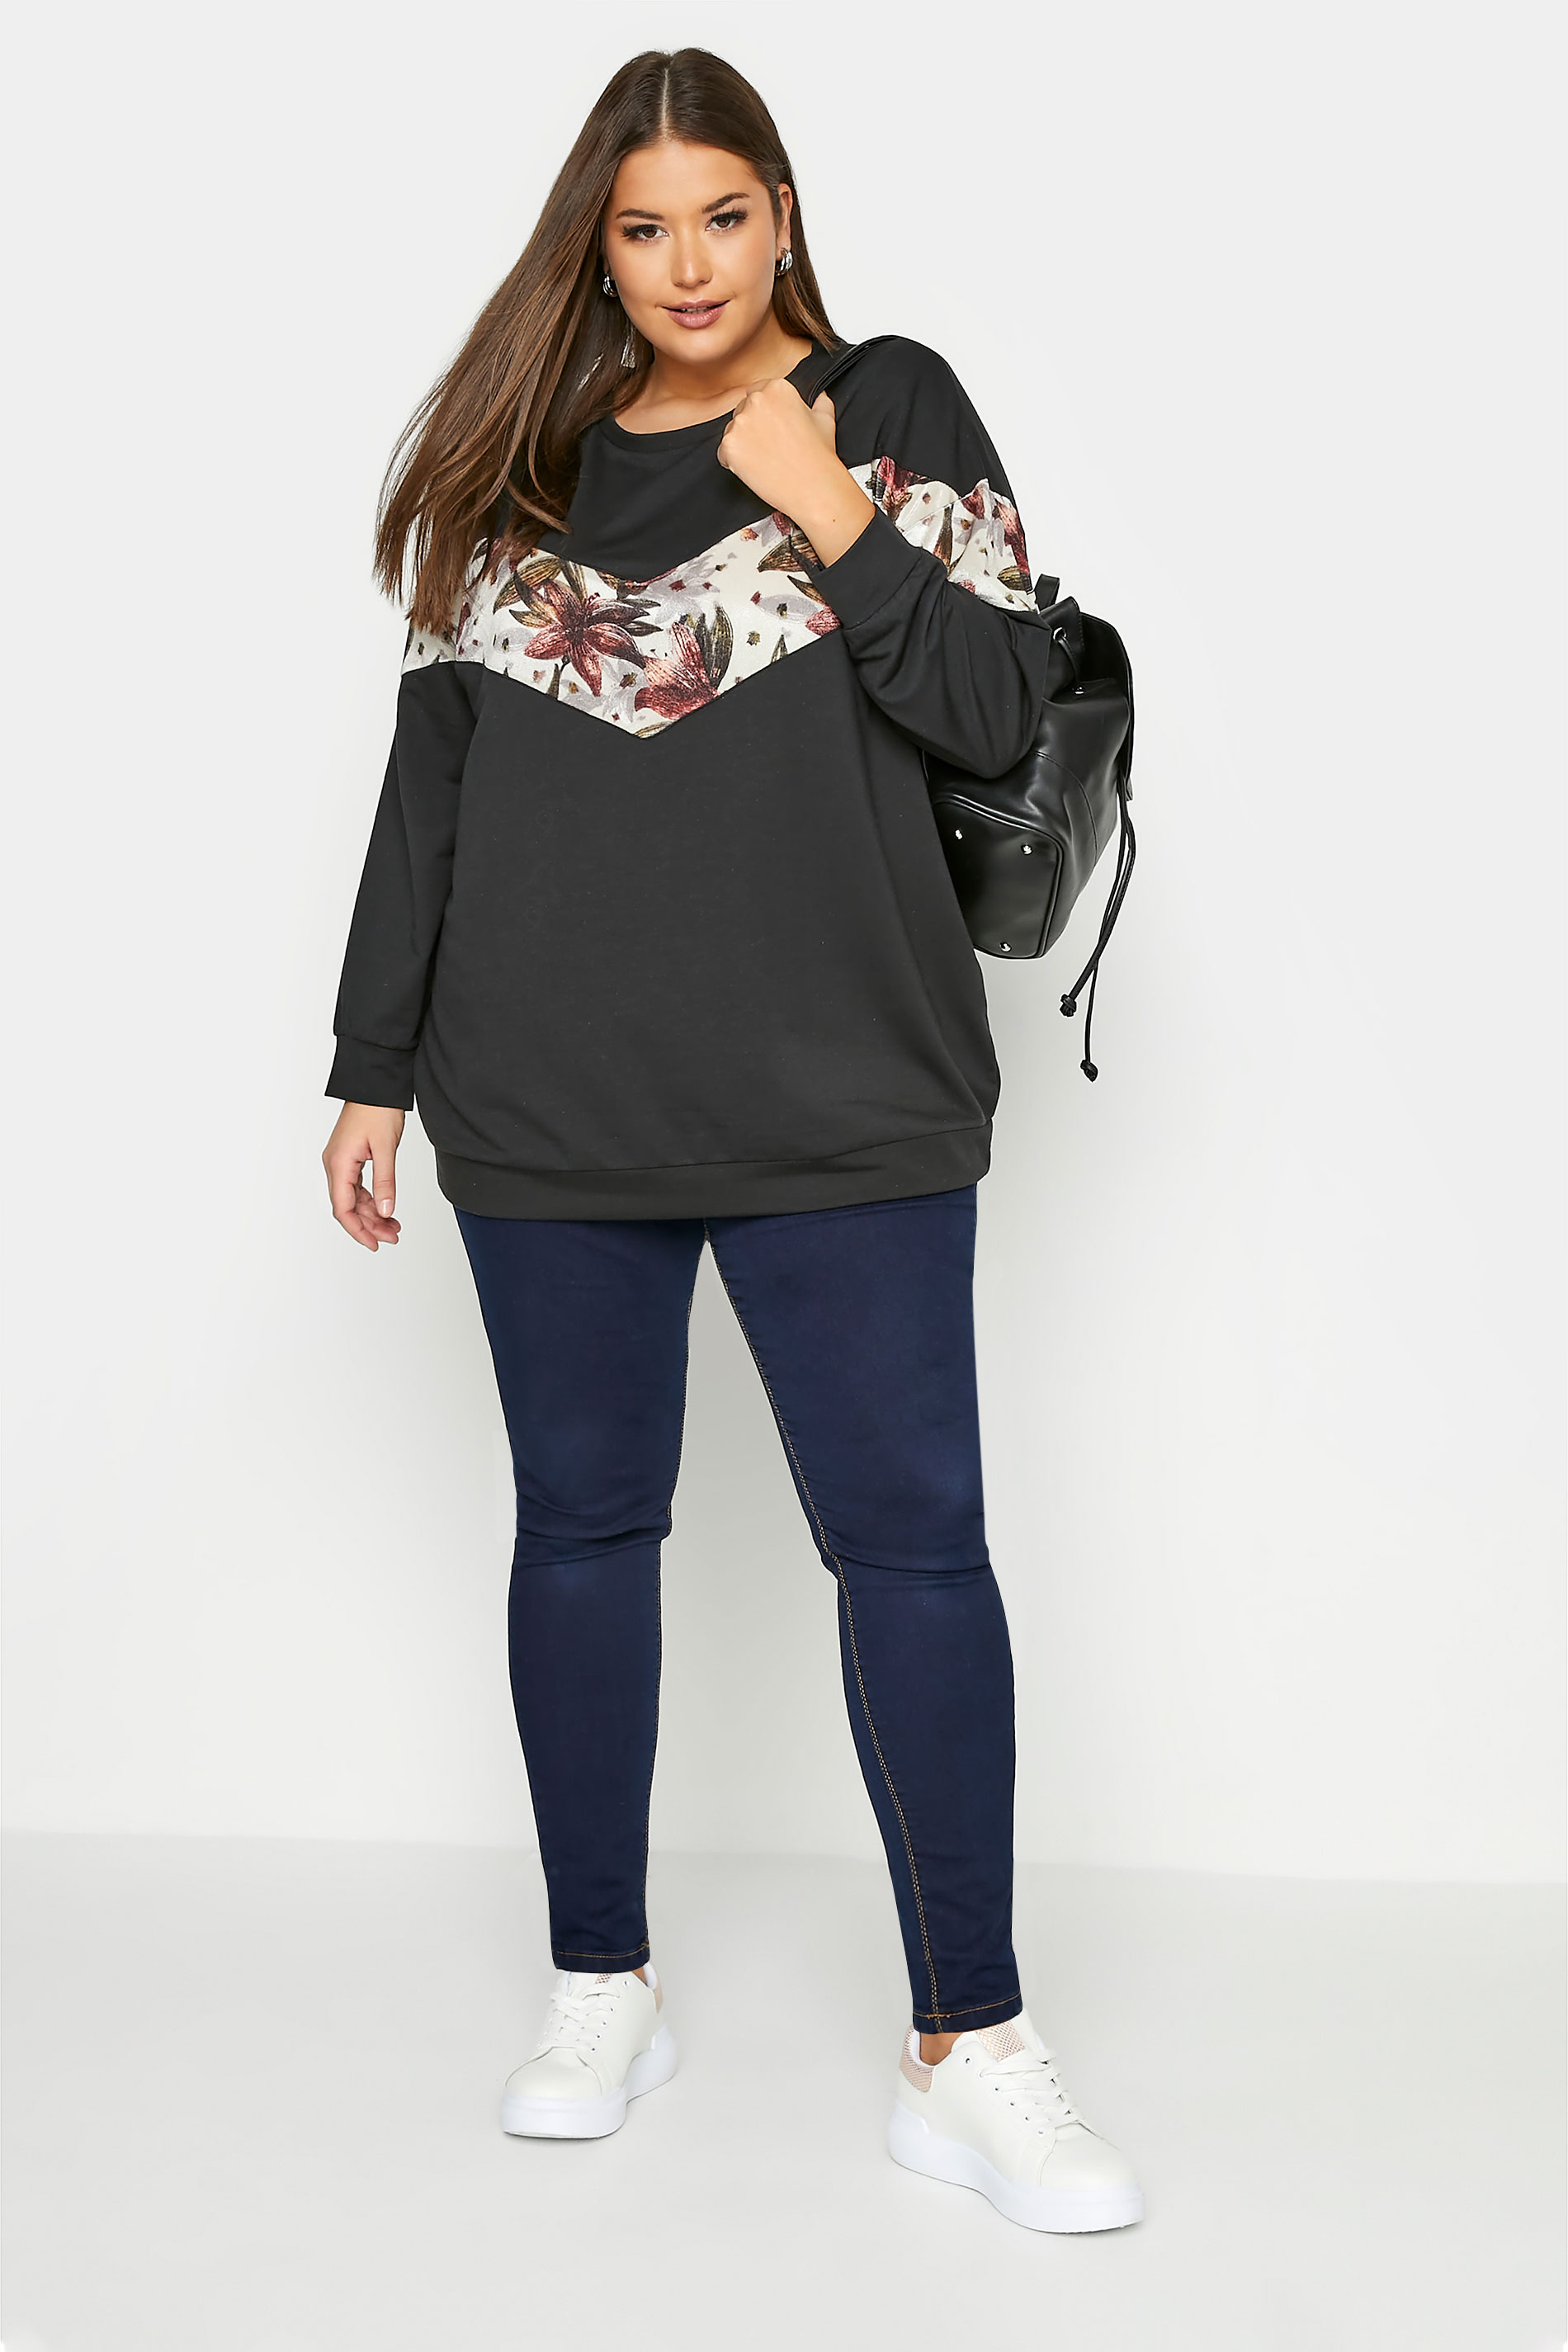 Grande taille  Pulls à Capuche, Sweatshirts & Polaires Grande taille  Sweatshirts | Sweatshirt Noir en Jersey Bande Floral - JL61894